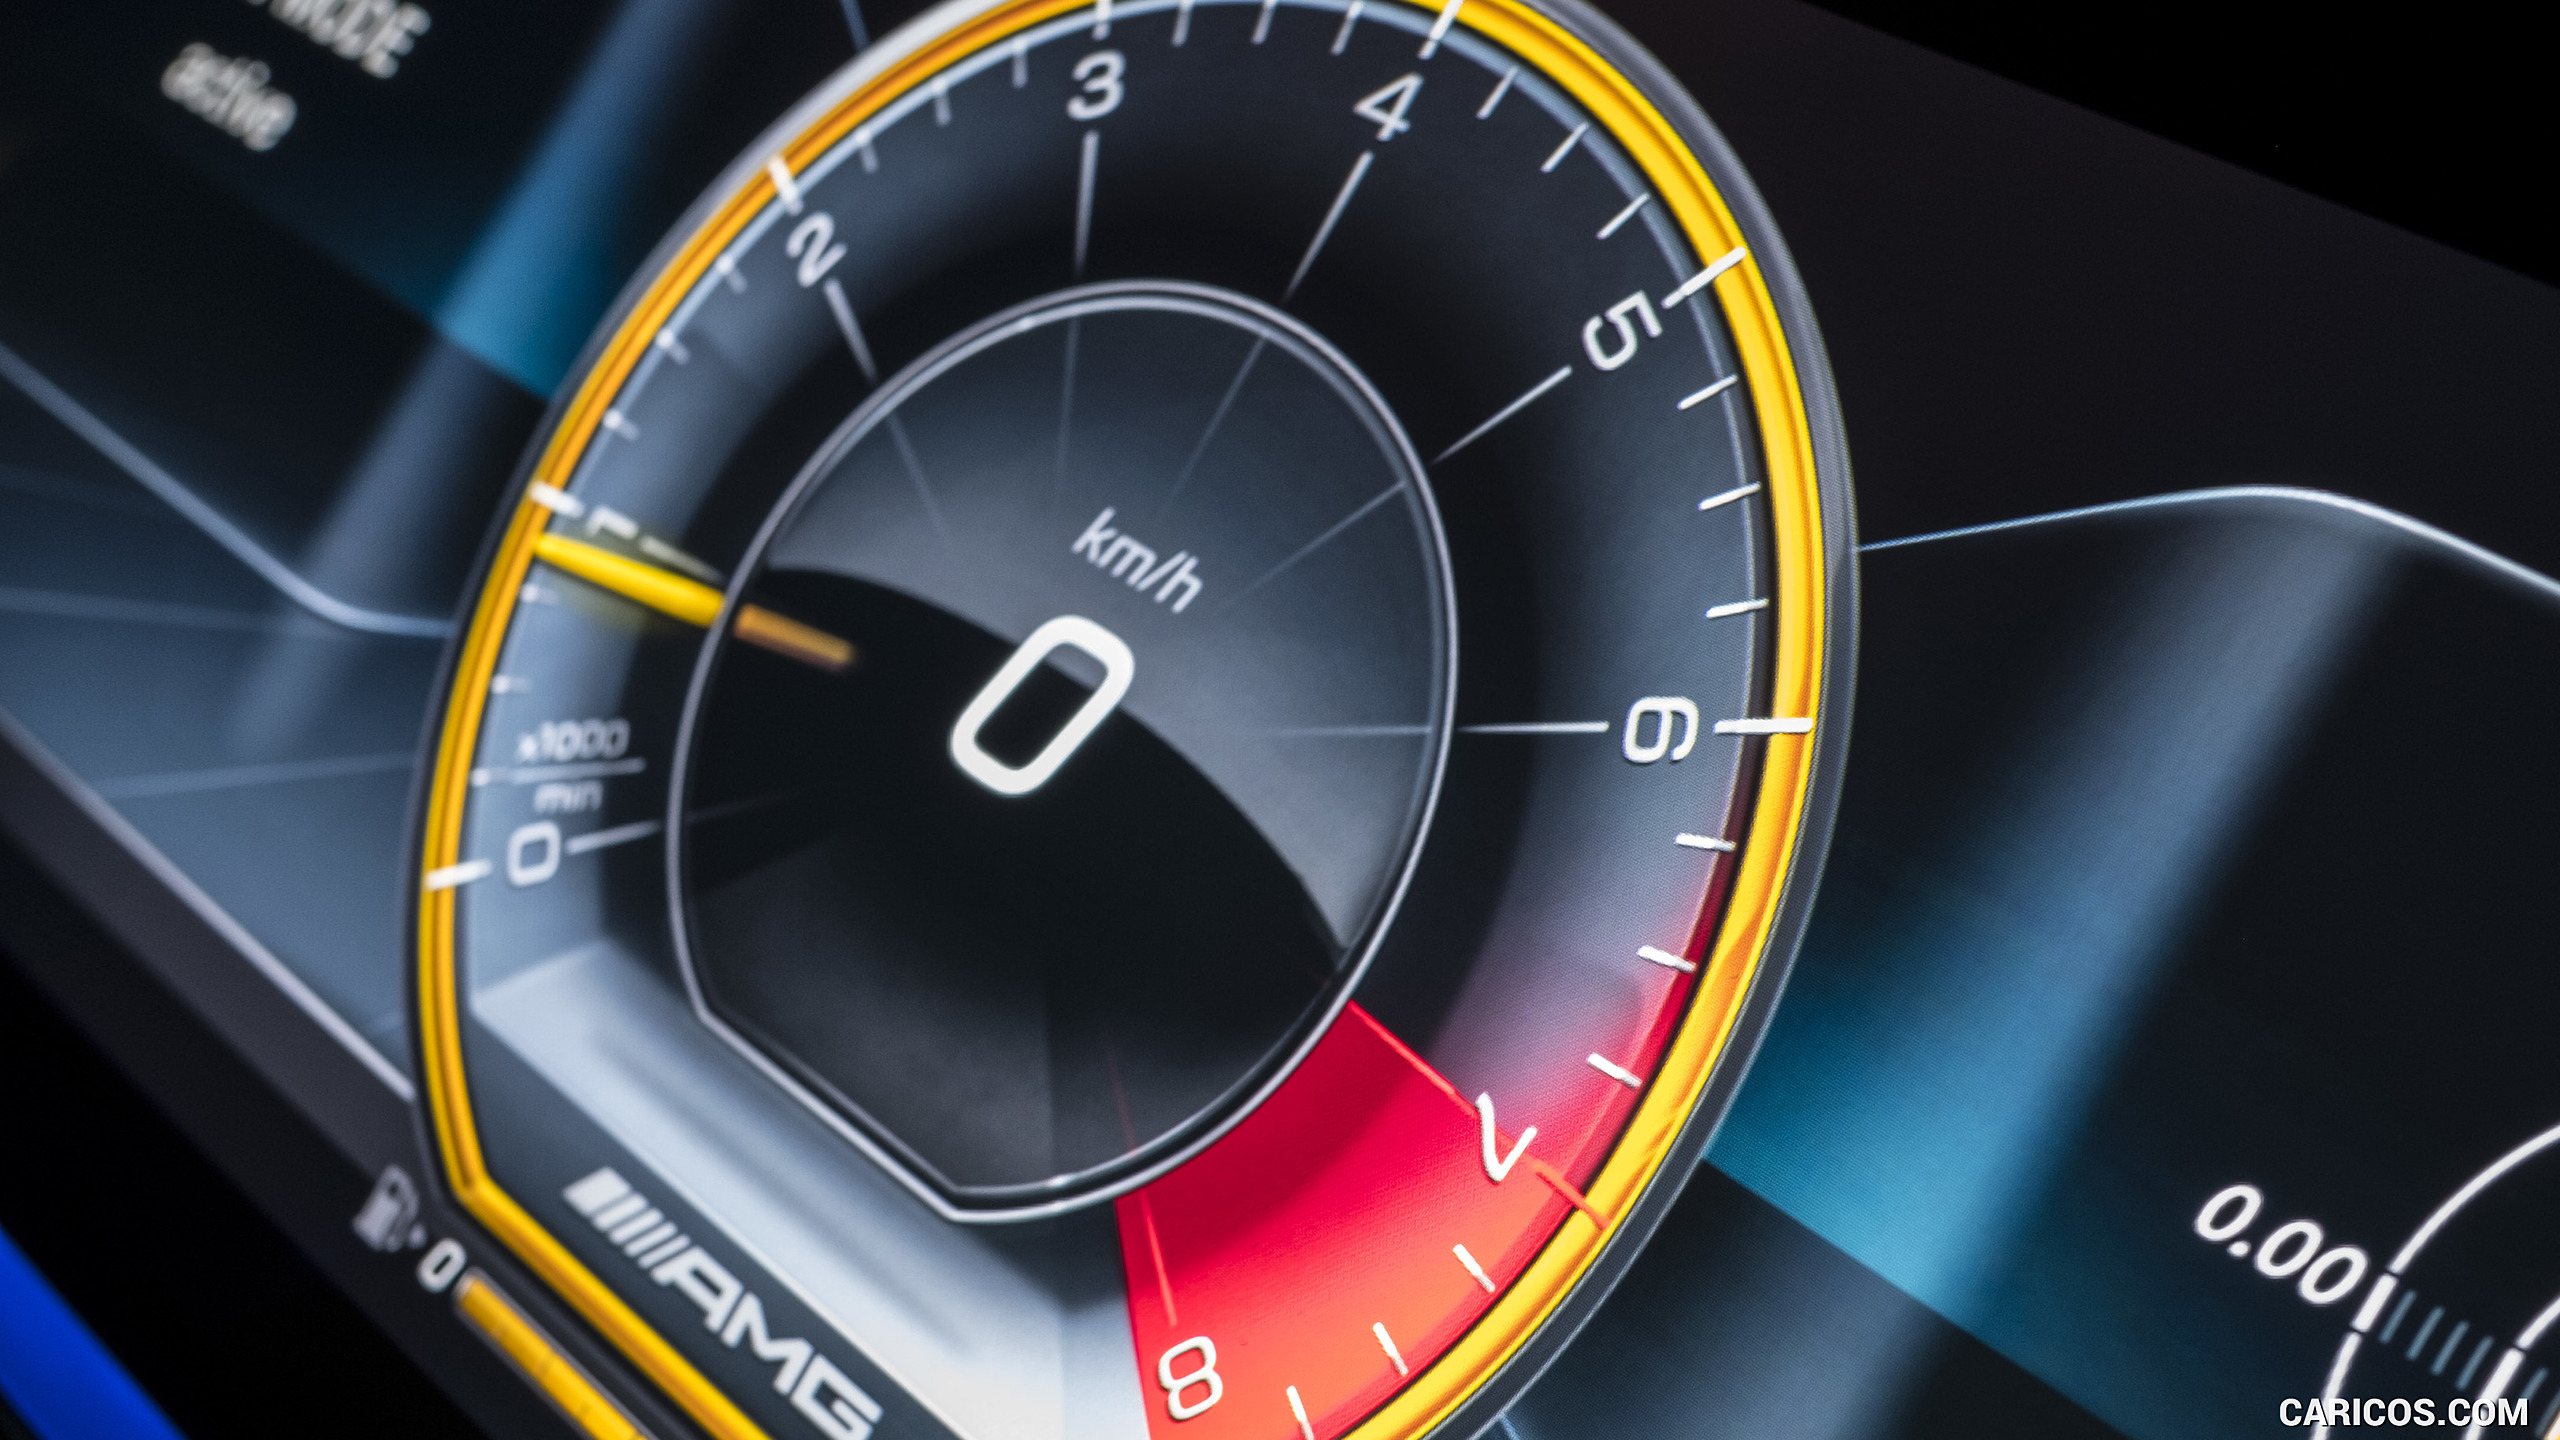 2018 Mercedes-AMG E63 S 4MATIC+ - Drift Mode - Digital Instrument Cluster, #153 of 323